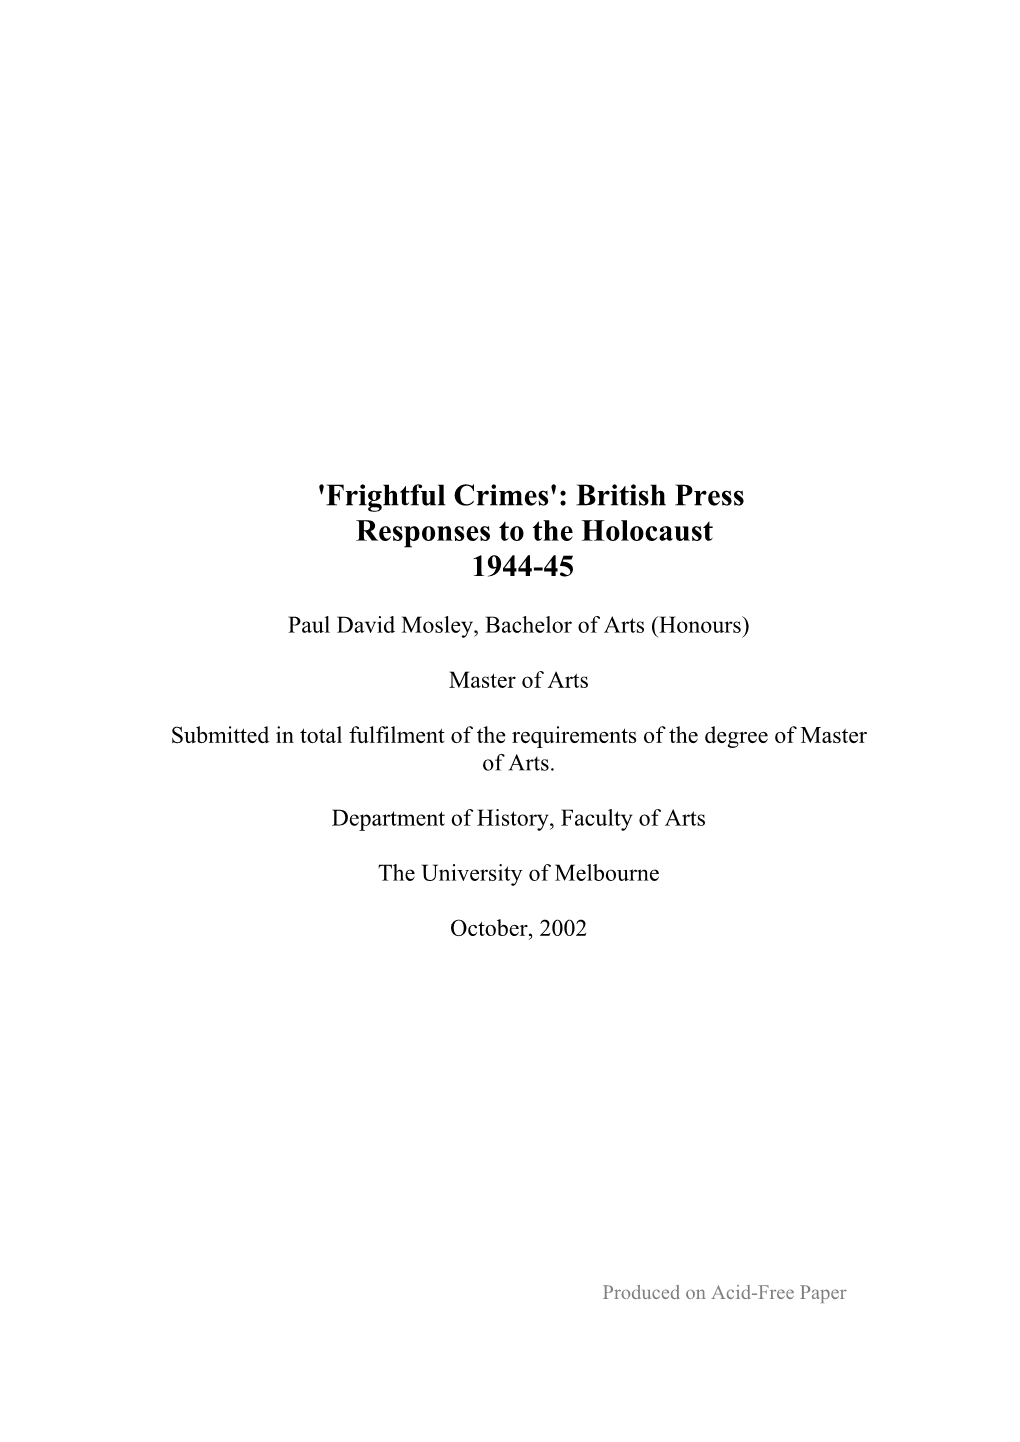 'Frightful Crimes': British Press Responses to the Holocaust 1944-45